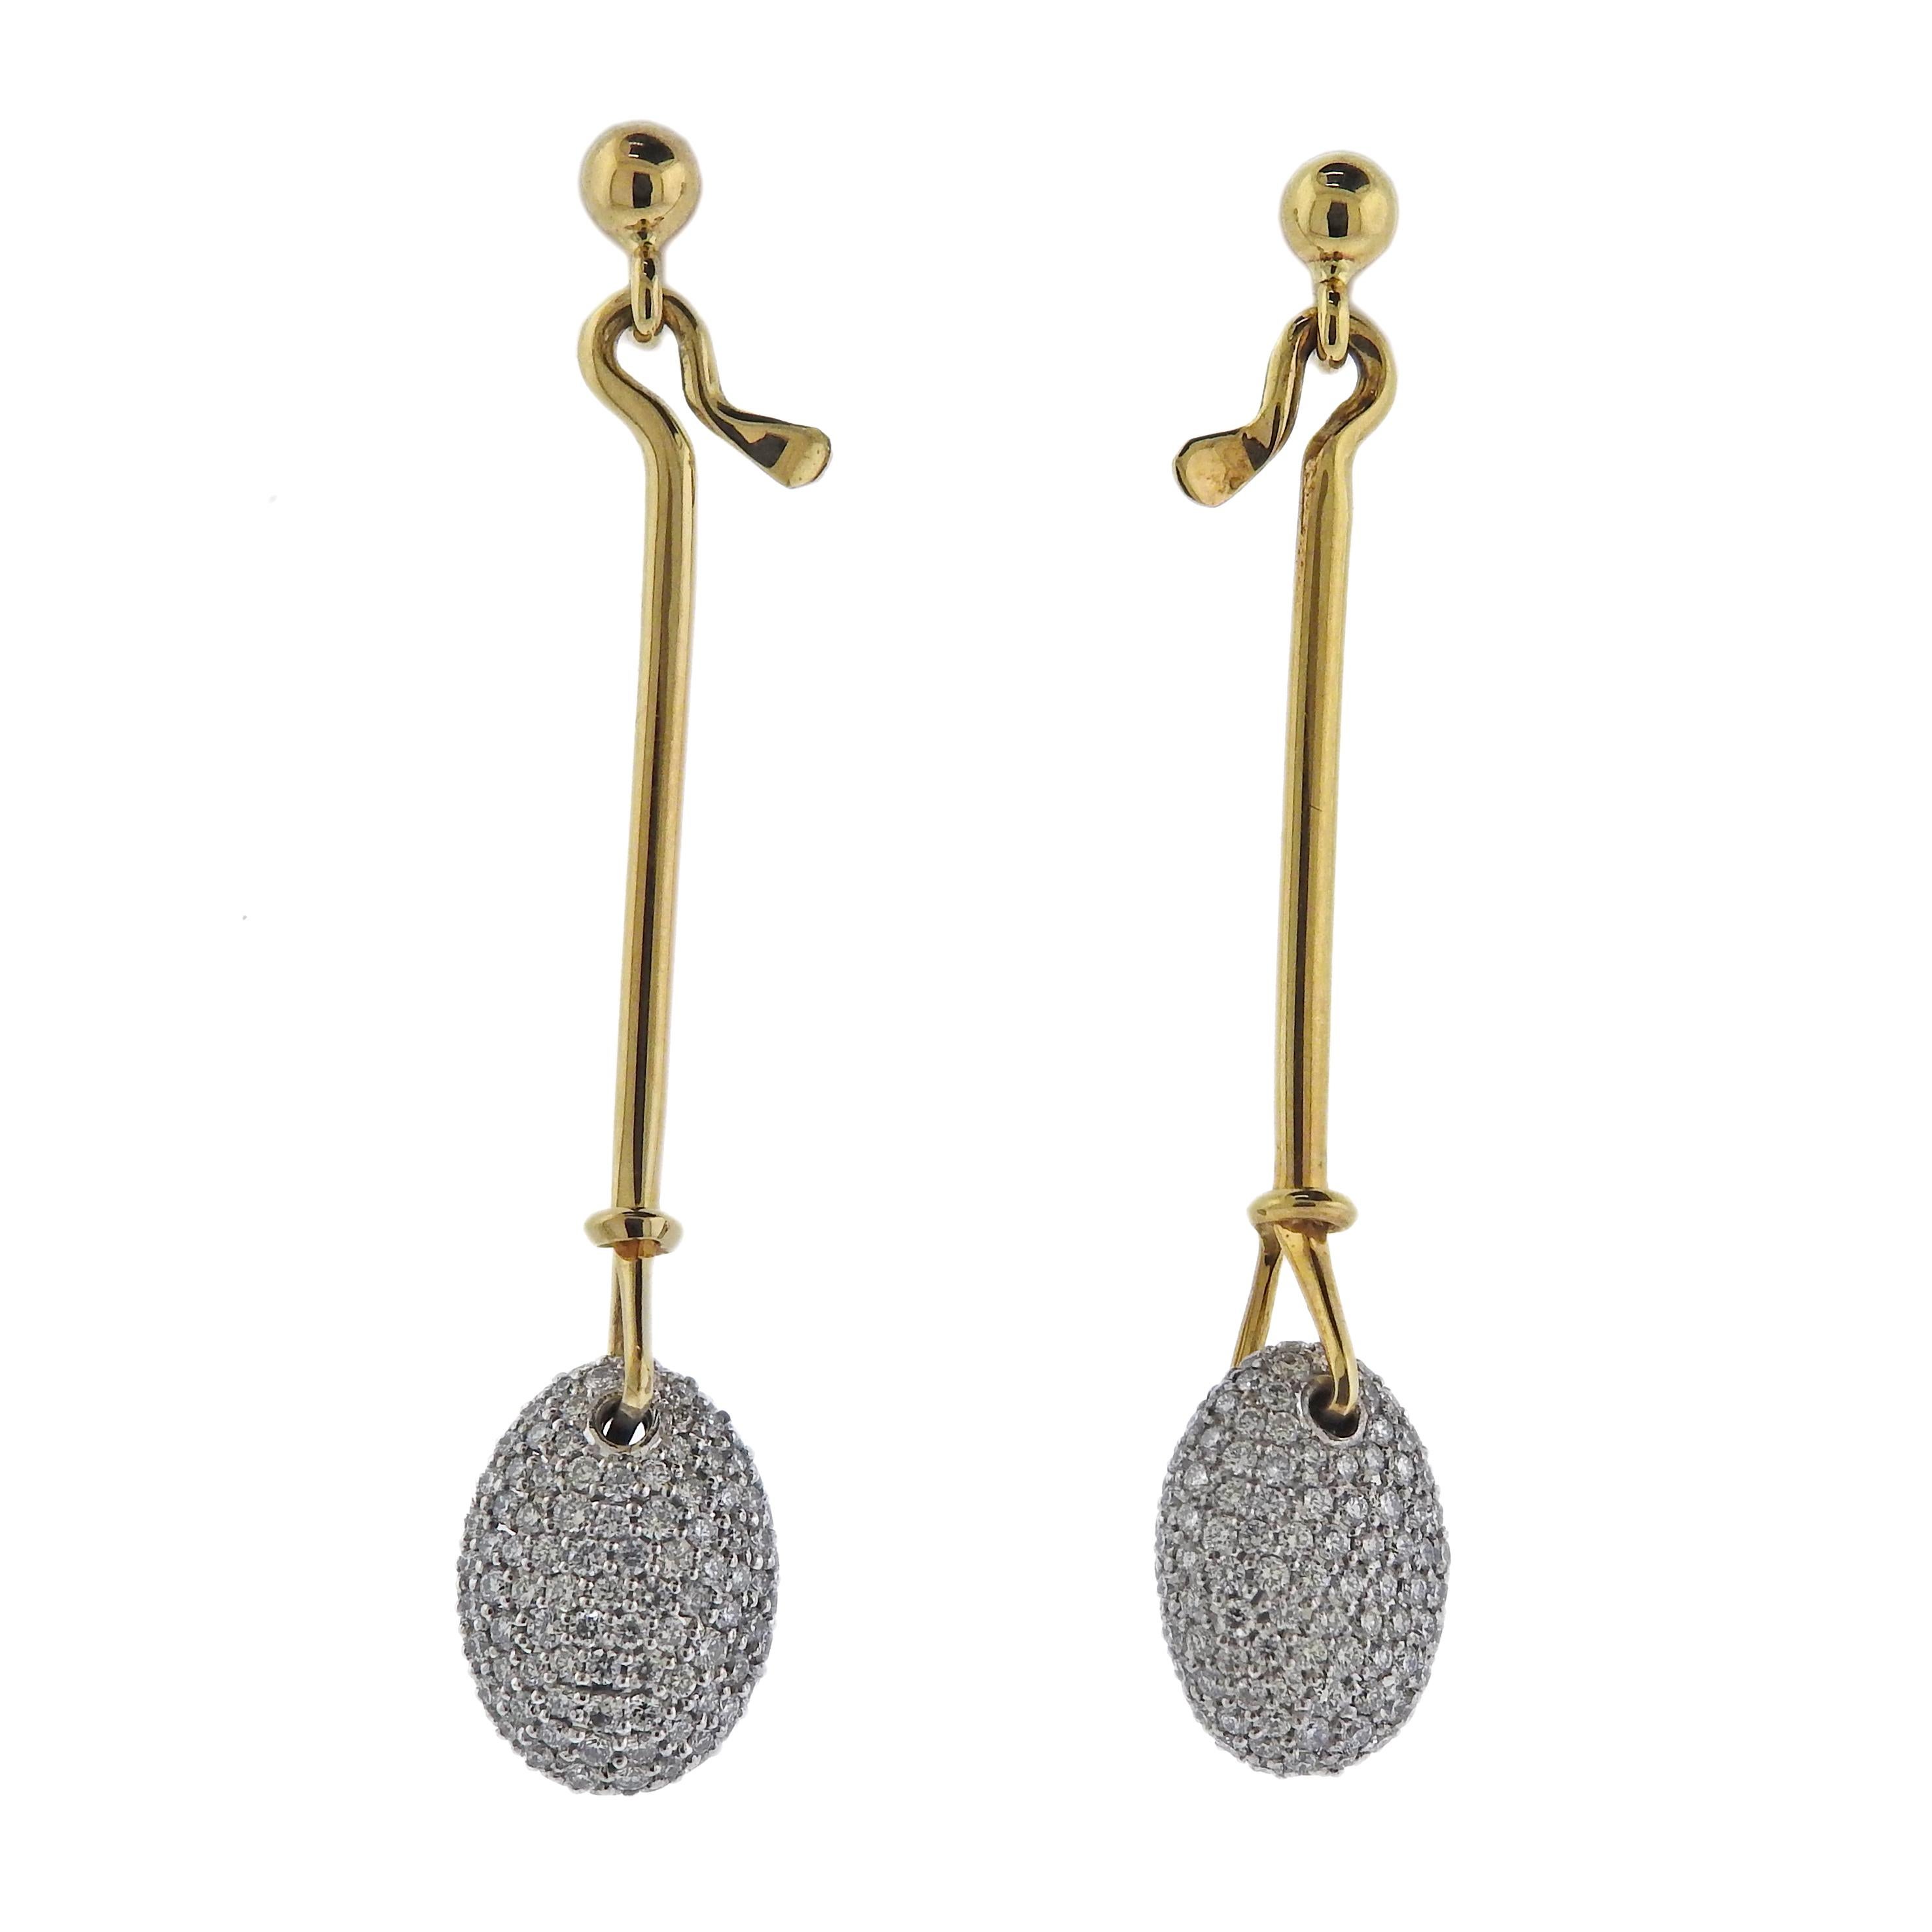 Brand new Georg Jensen 18k yellow gold Dew Drop earrings, with approx. 1.30ctw G/VS diamonds. Earrings are 43mm long. Model # 3518422. Marked: GJ mark, 750. Weight - 5.5 grams.